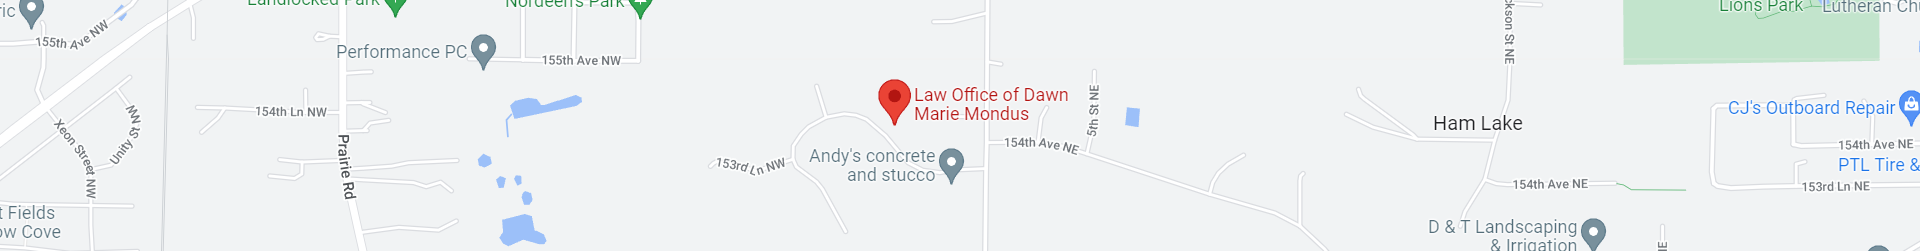 Mondus Law Office